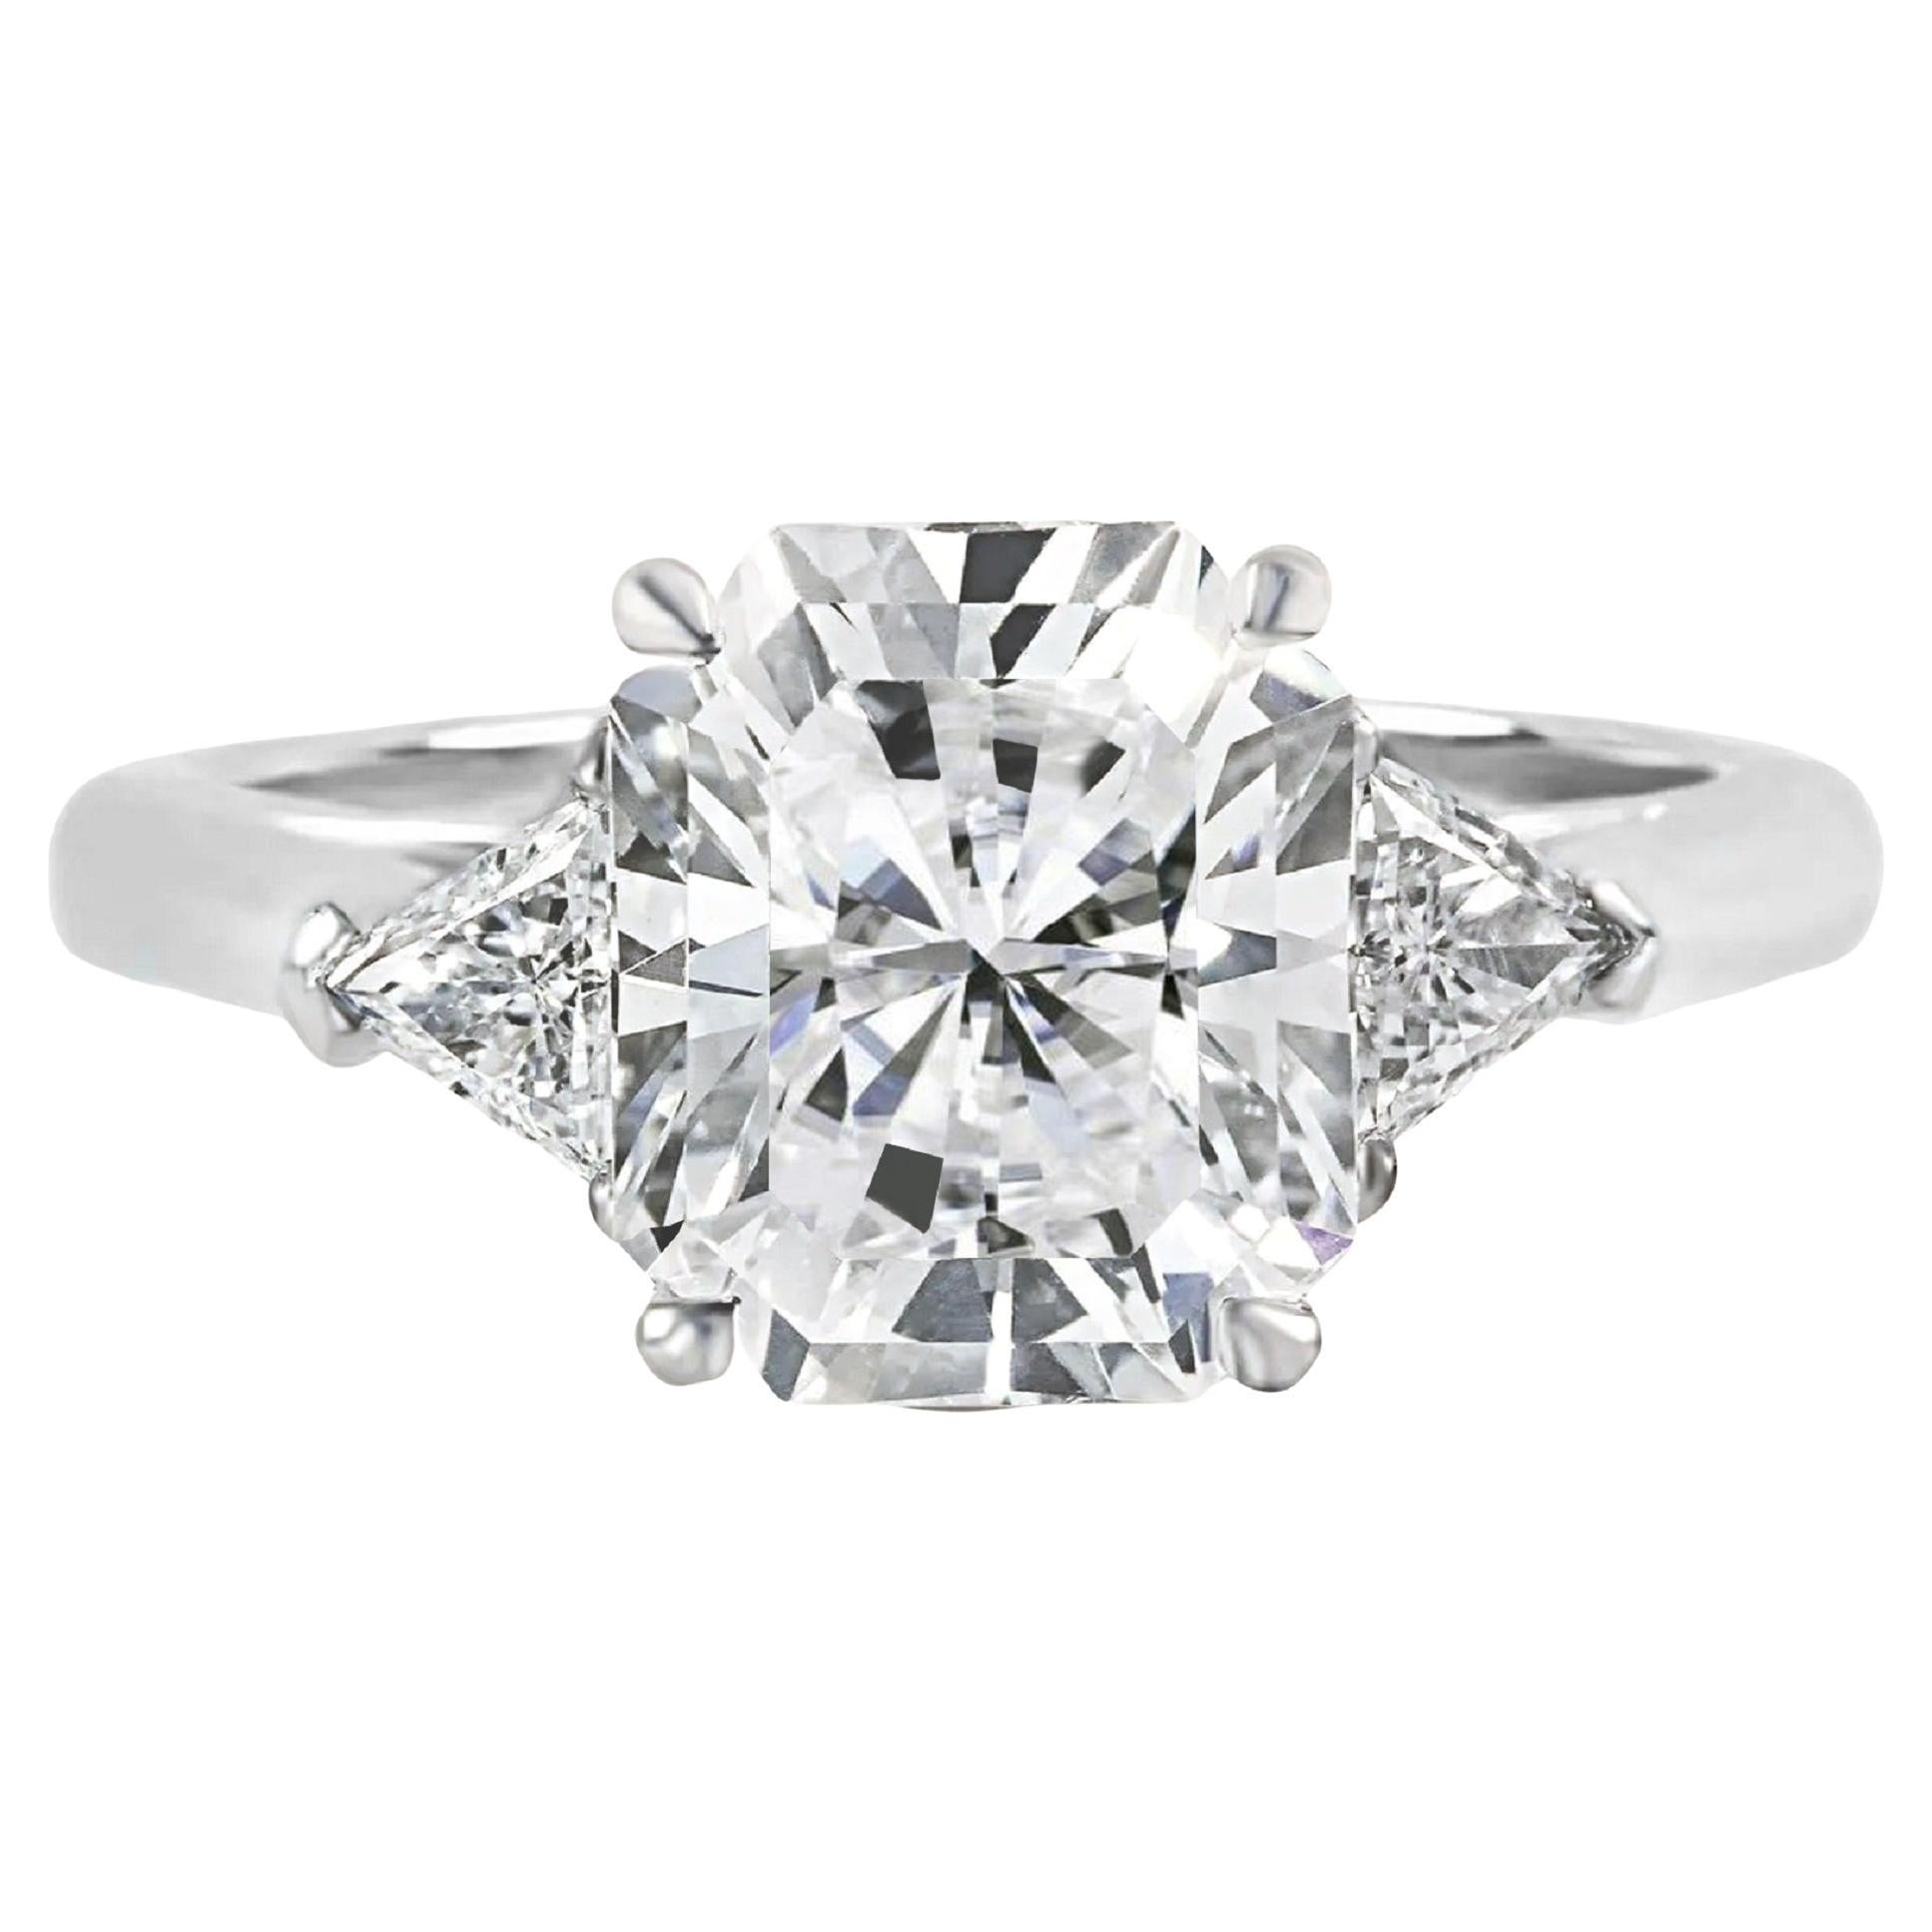 Tiffany & Co. Total Weight Platinum Radiant Brilliant Cut Diamond Ring D VS1